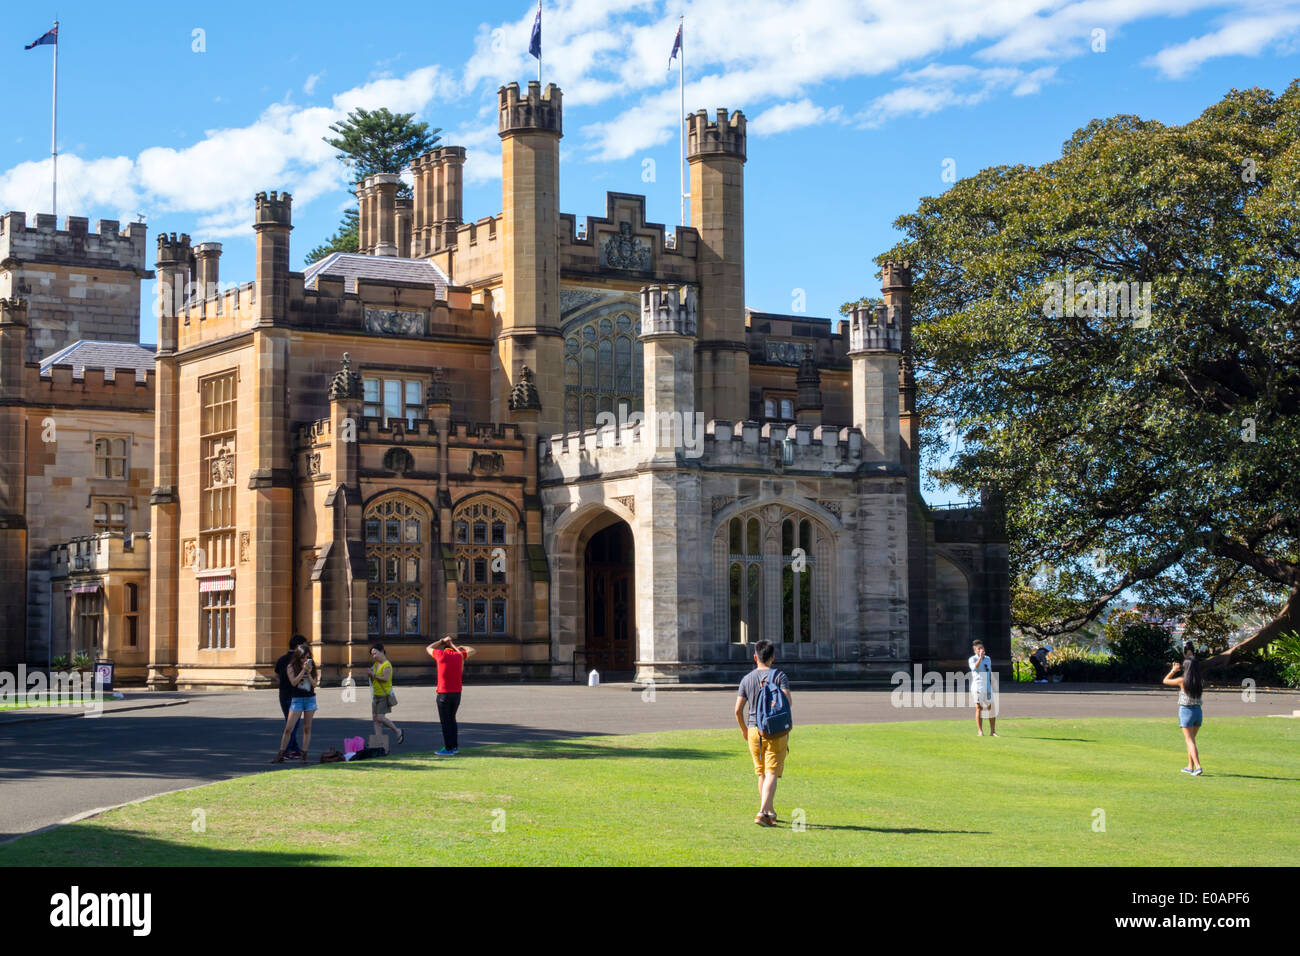 Sydney Australien, Royal Botanic Gardens, Government House, gotischer Stil, viktorianische Architektur, Rasen, AU140309118 Stockfoto